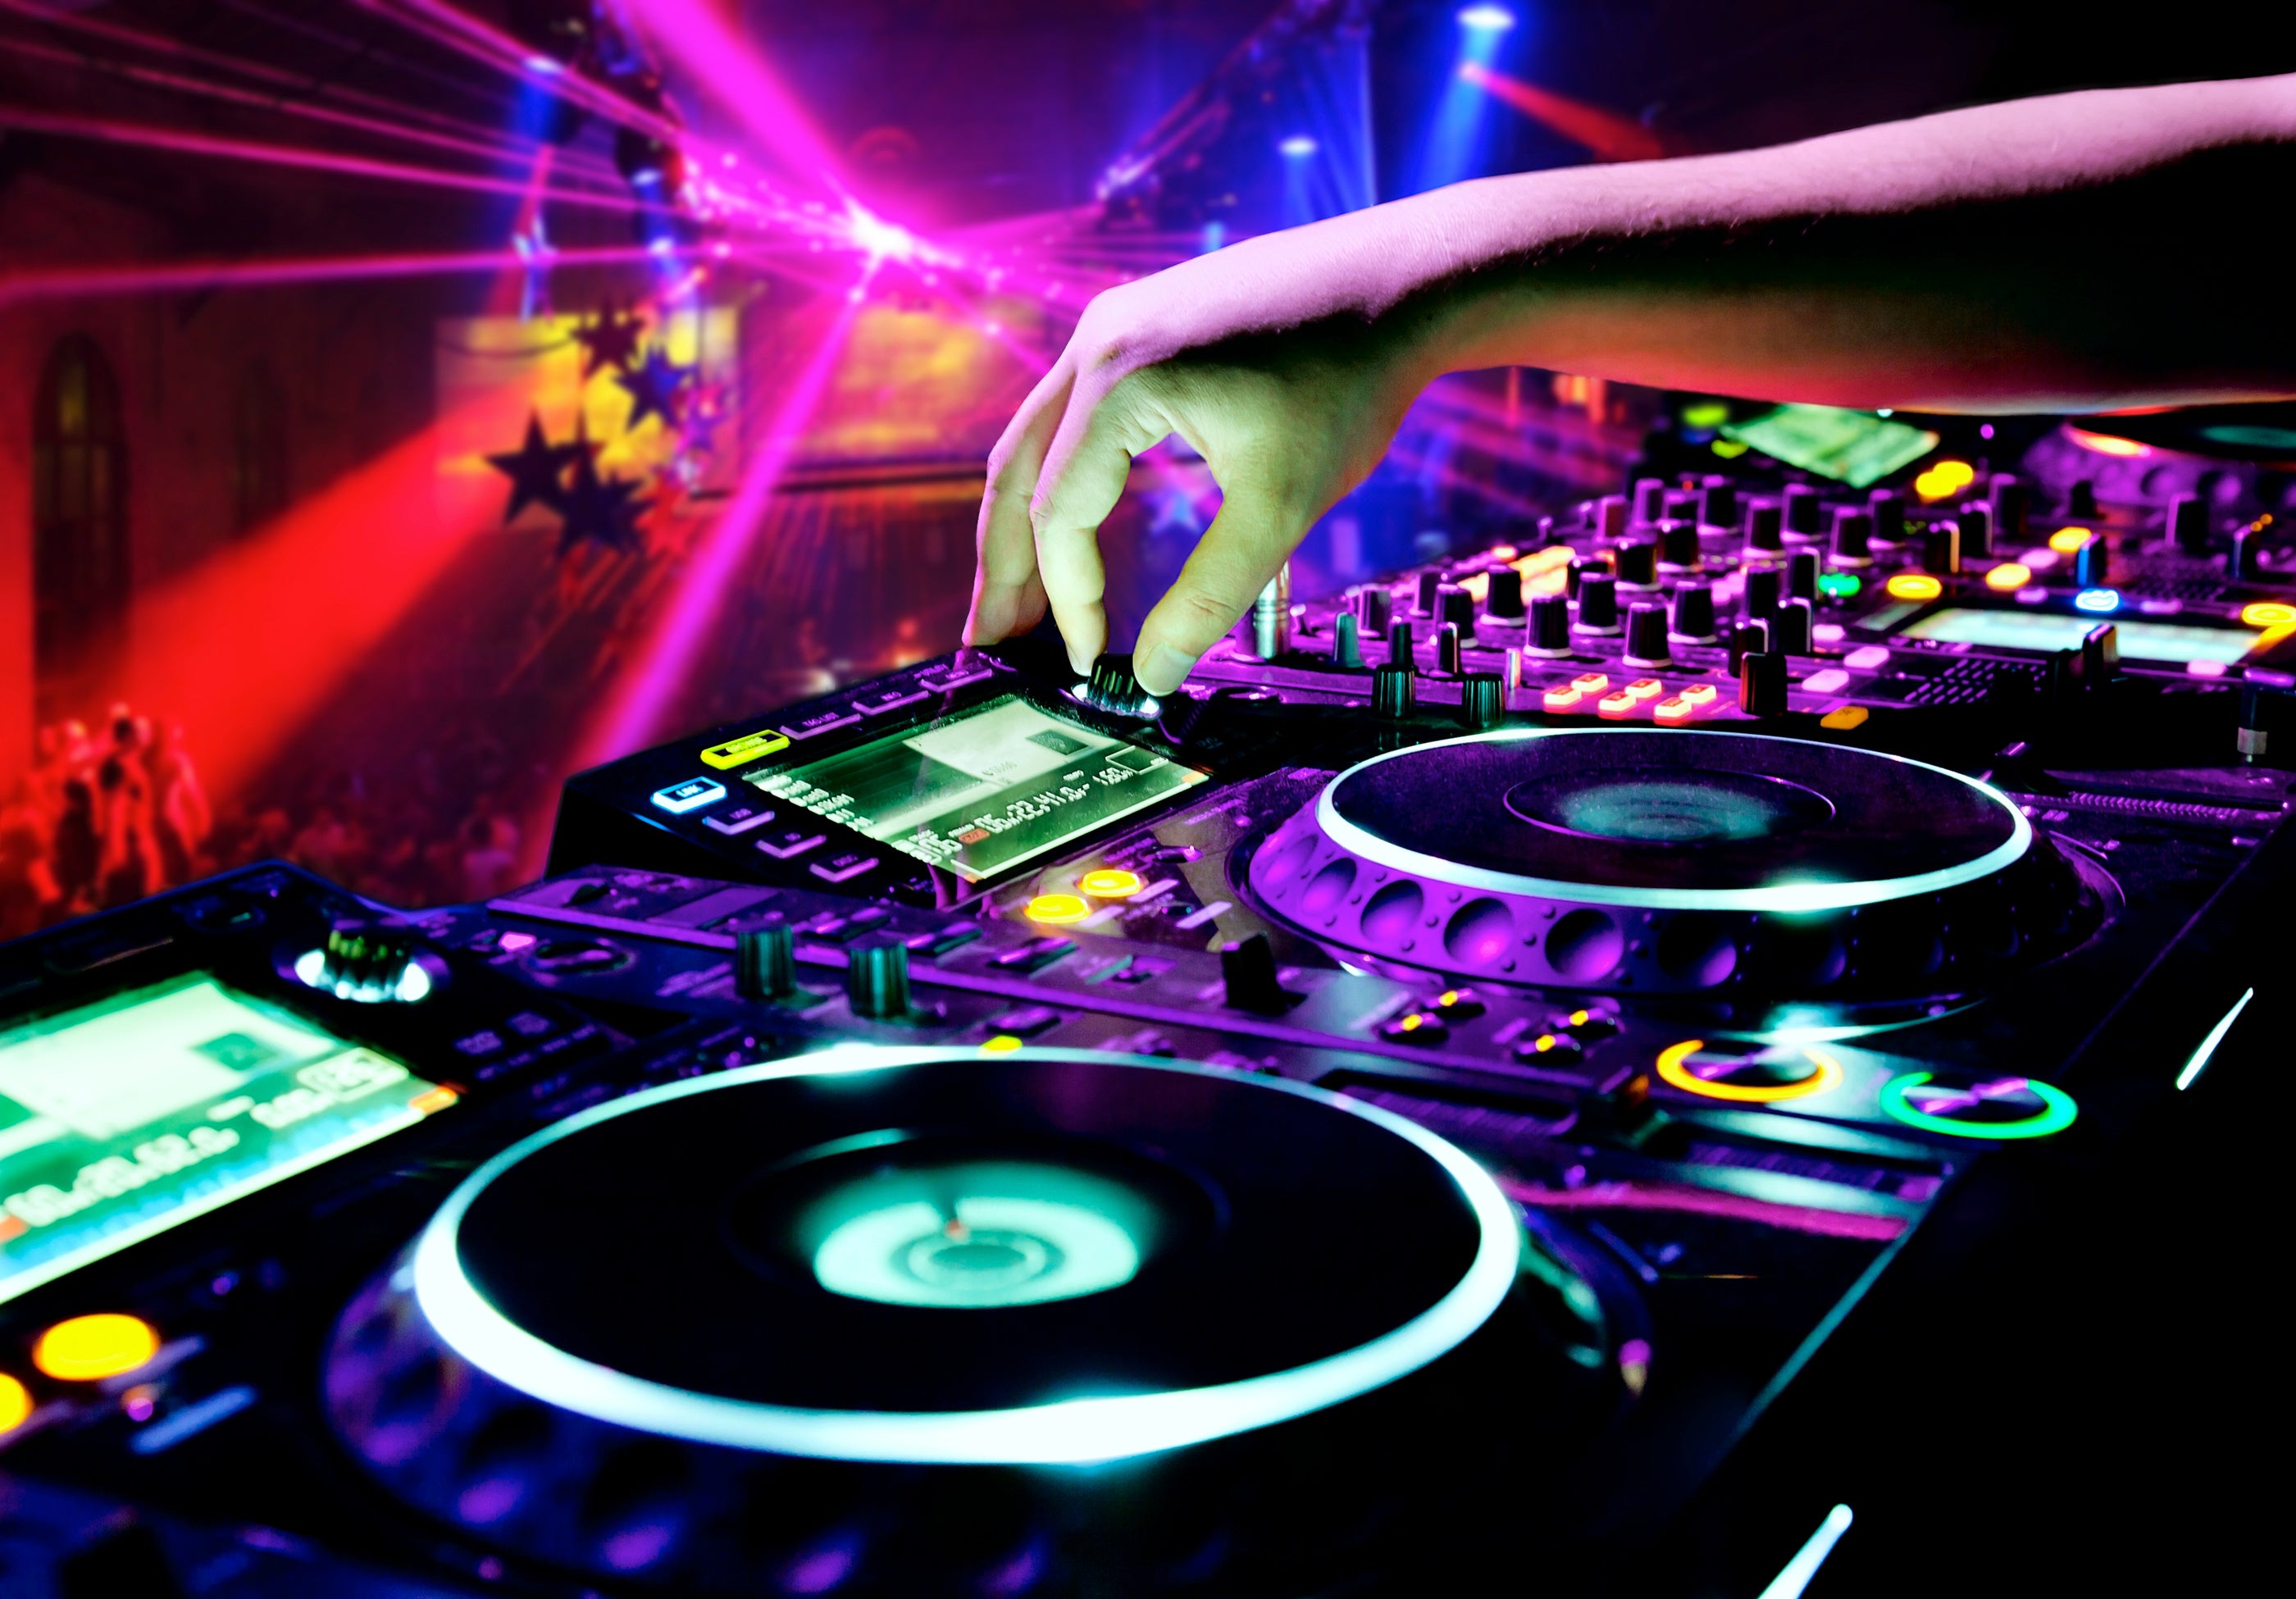 Top 9 Best DJ Accessories Must Haves of 2021